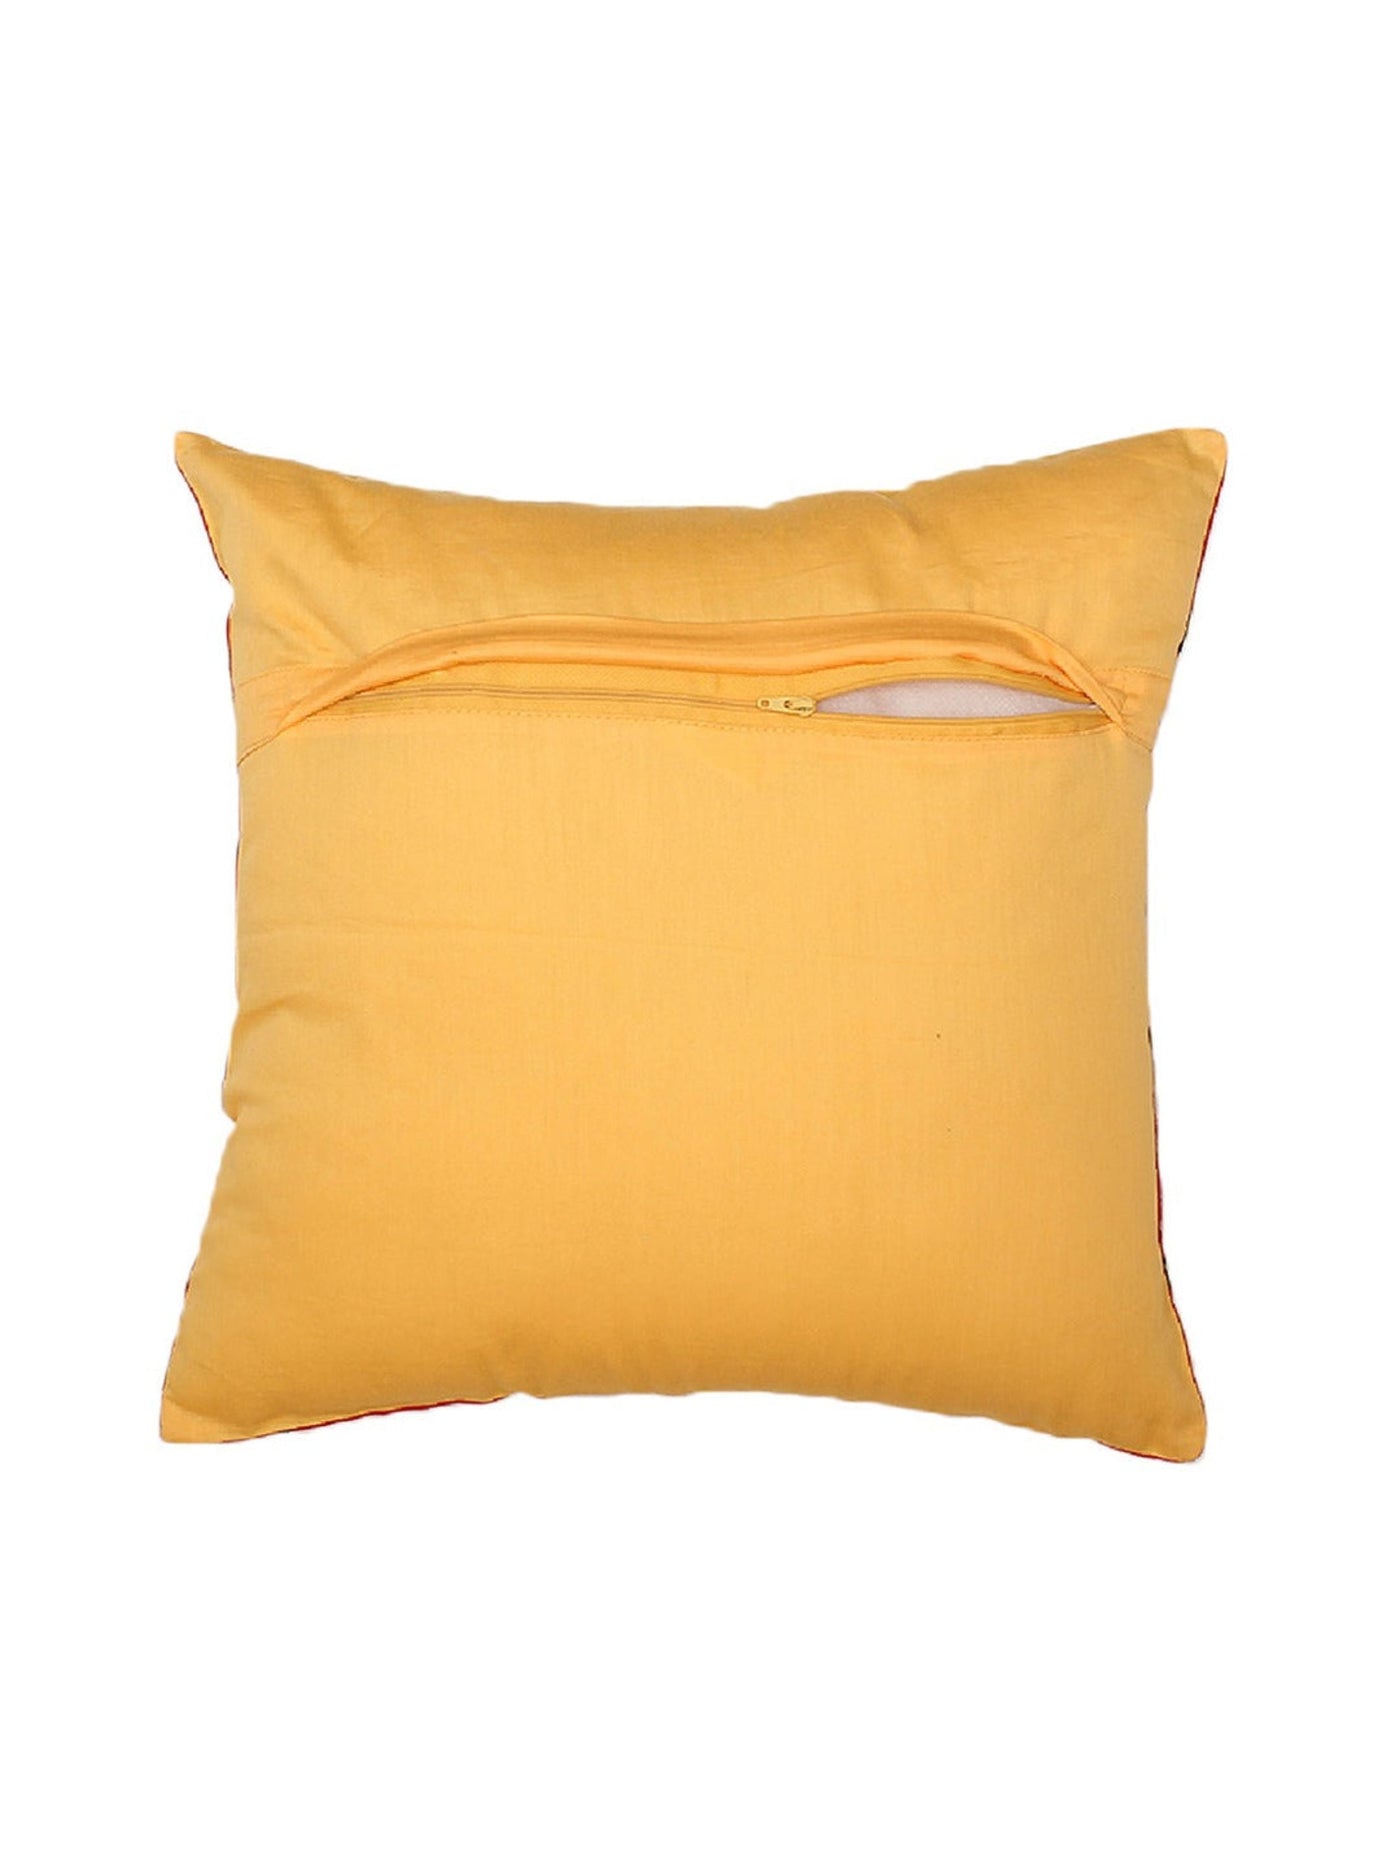 2 Cushion Covers - 2 s-8903773000845